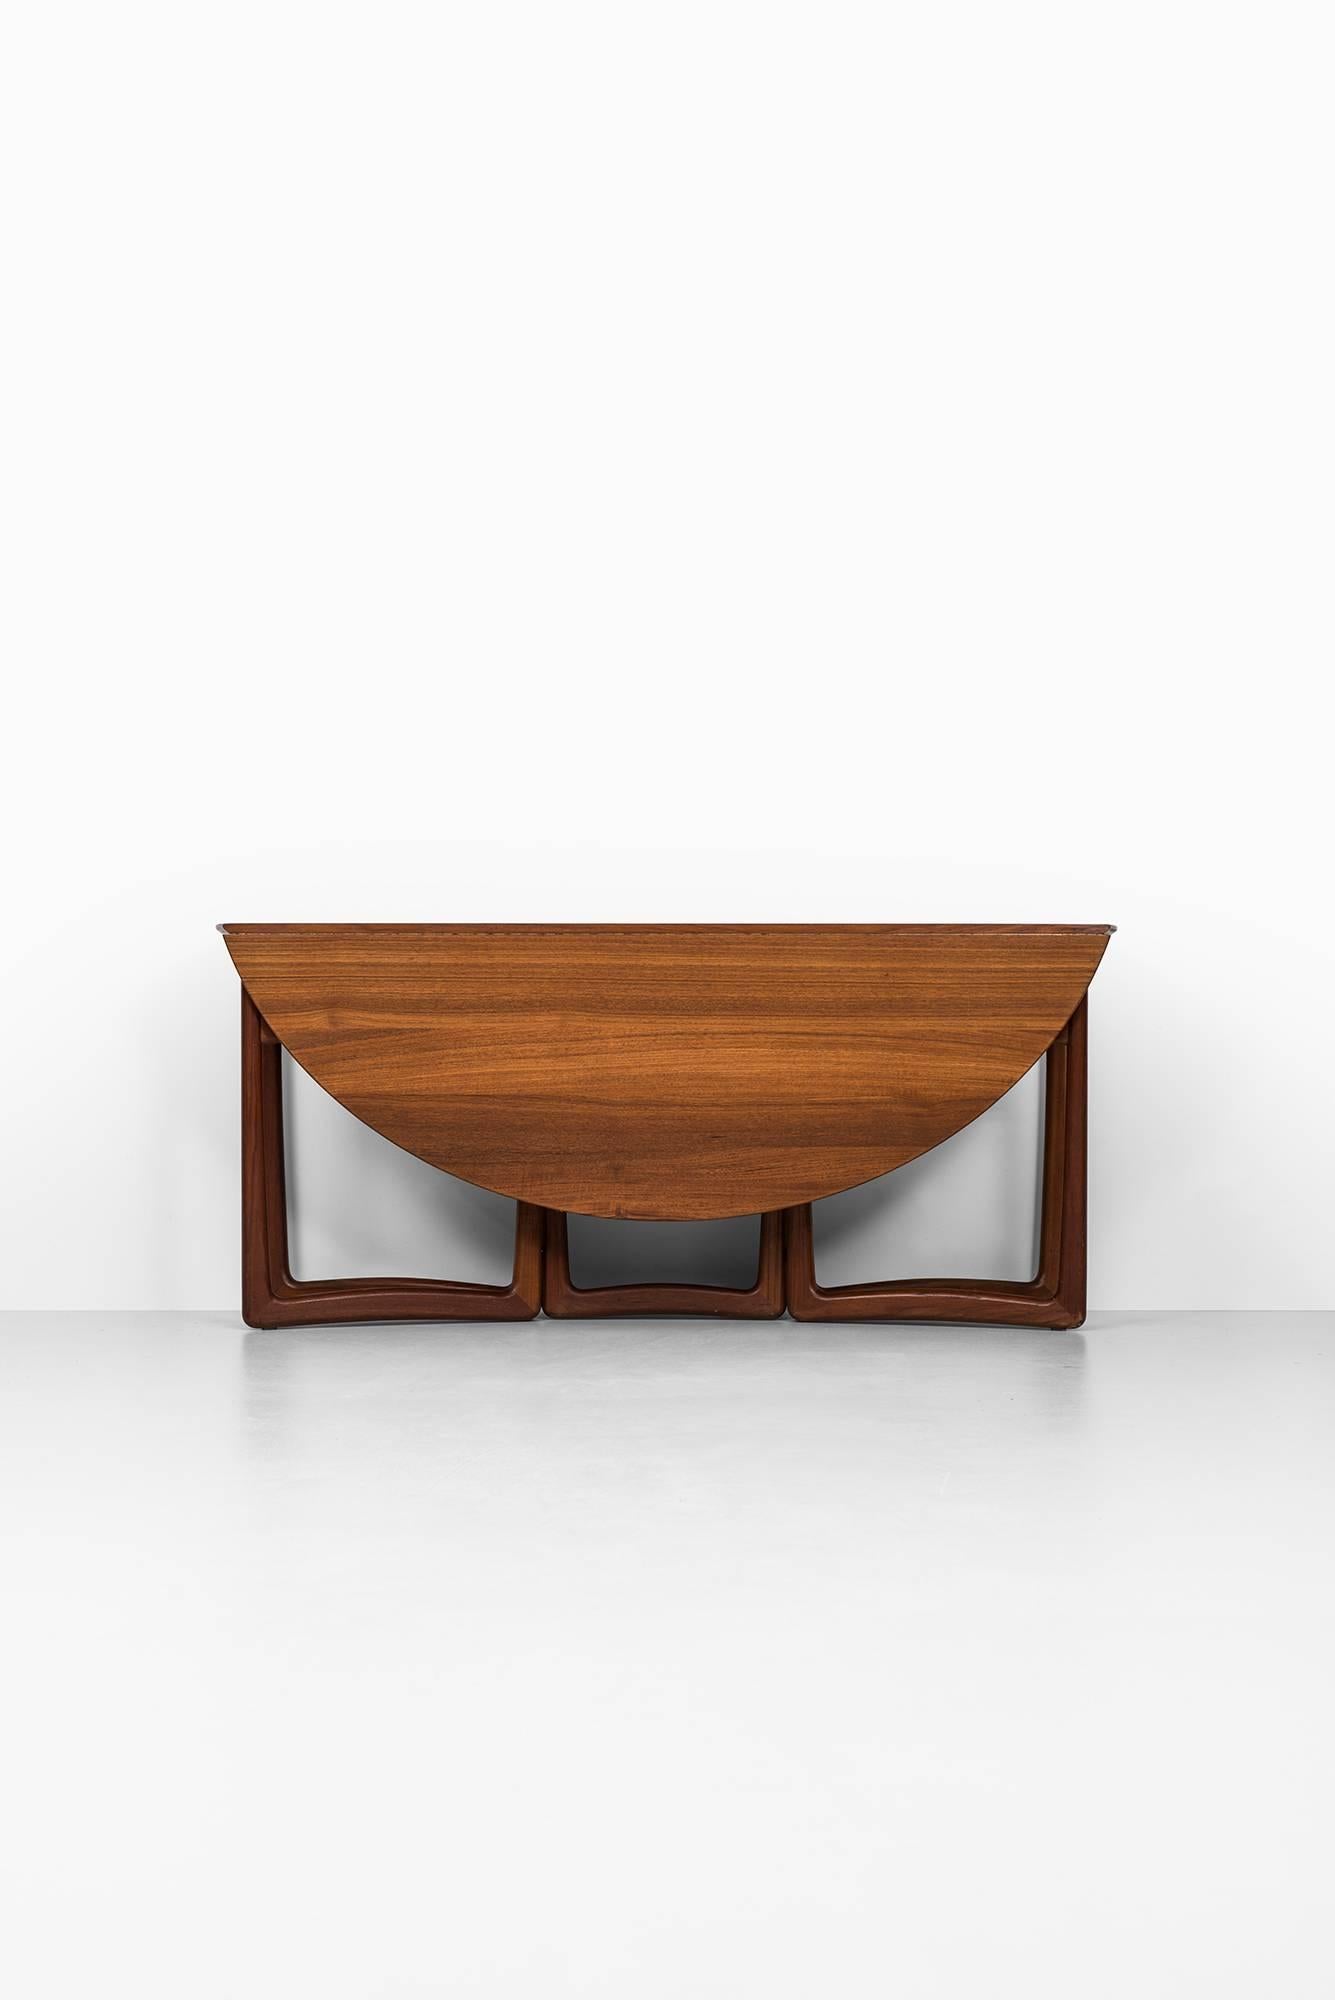 Rare drop-leaf dining / console table designed by Peter Hvidt & Orla Mølgaard-Nielsen. Produced by France & Son in Denmark.